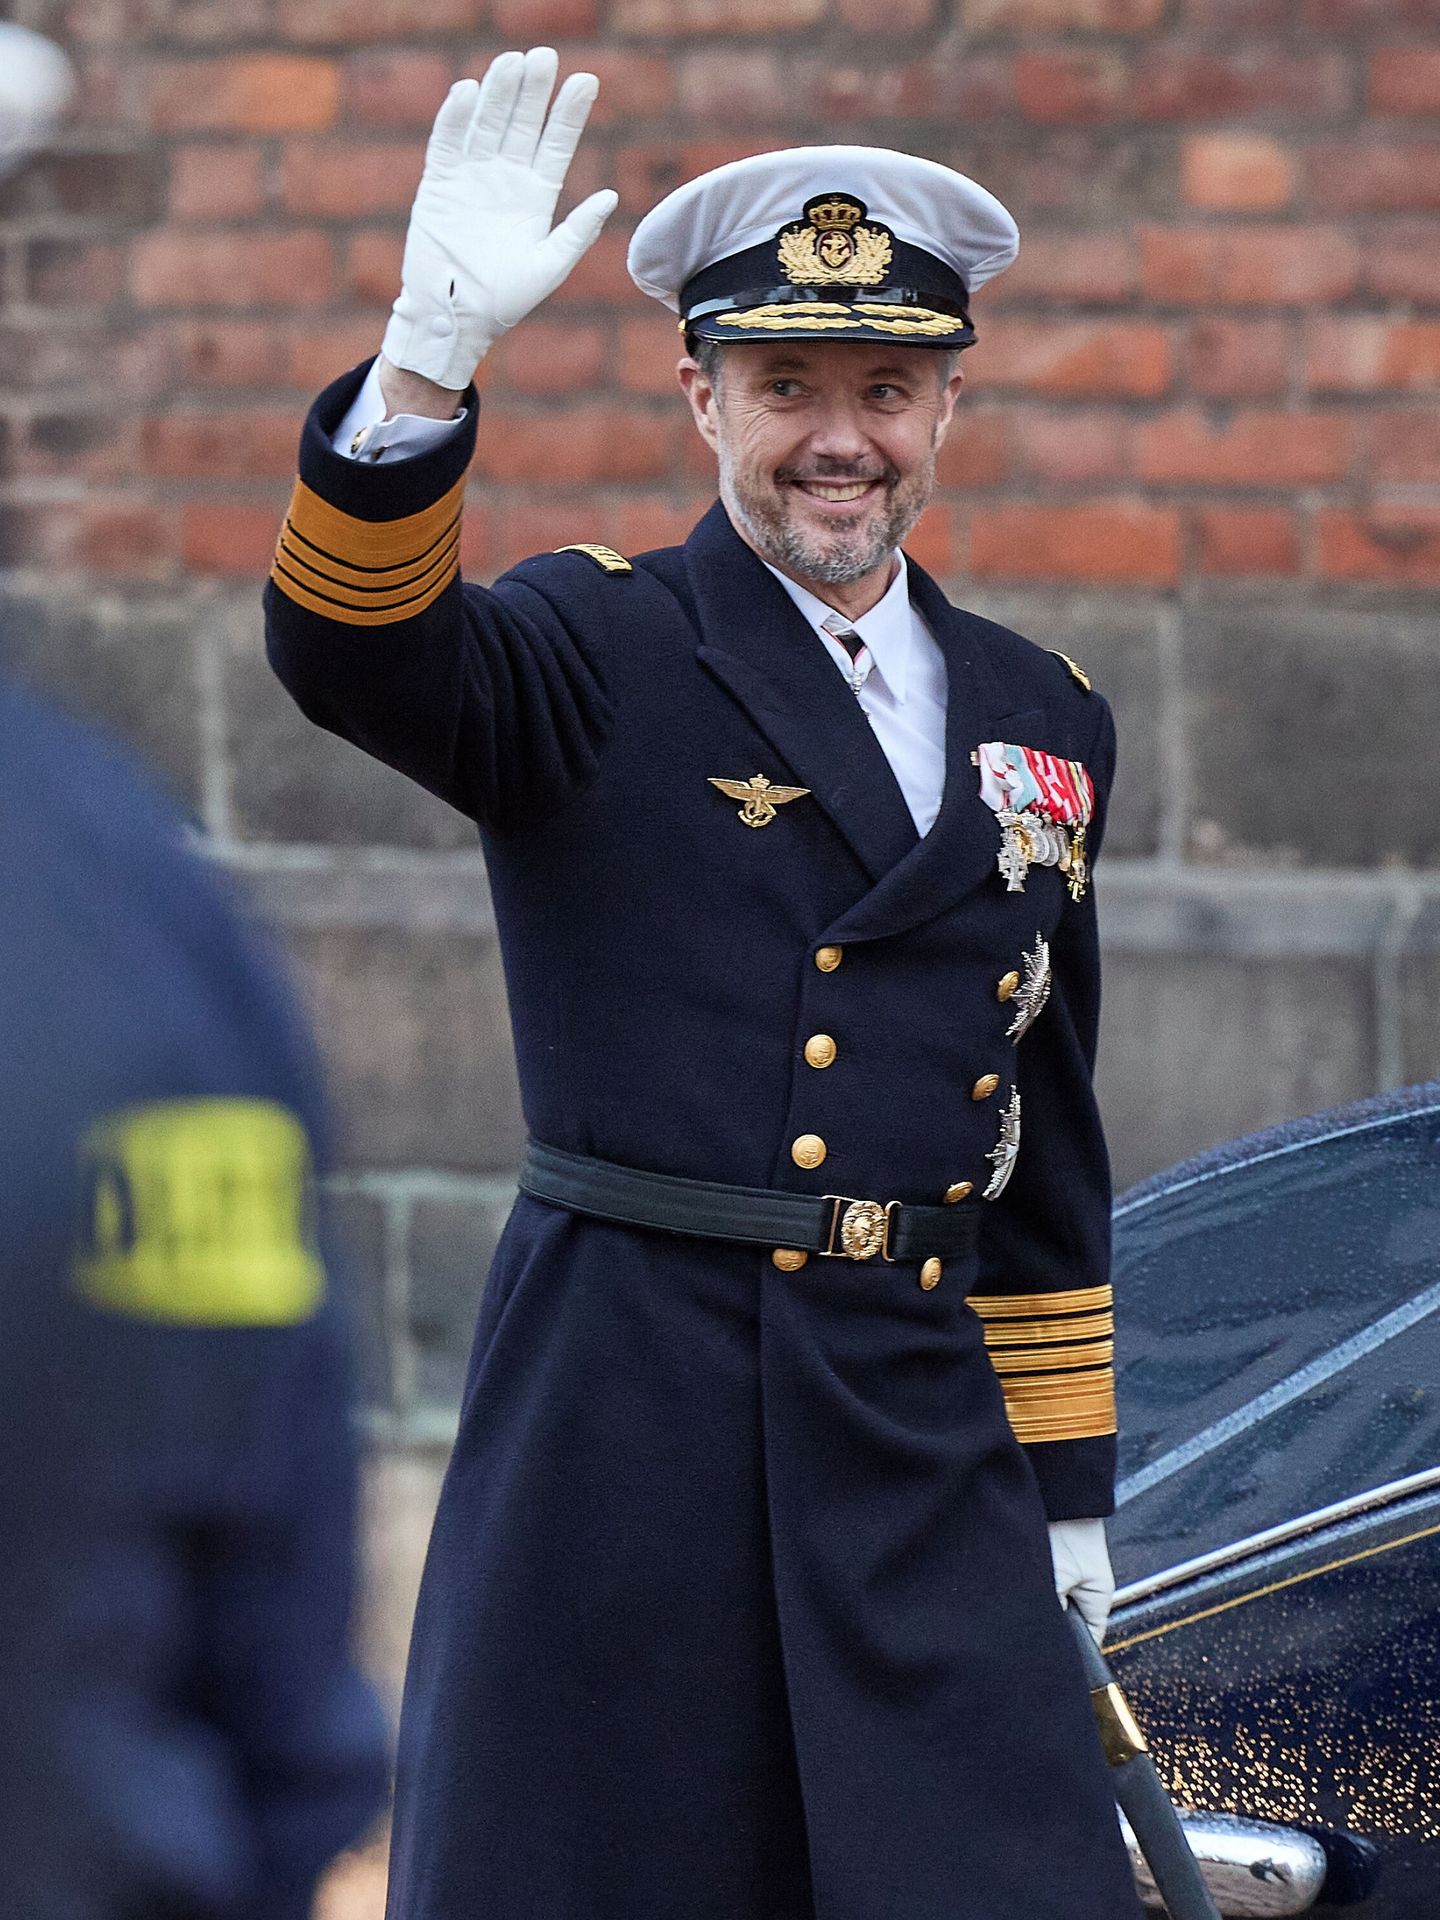 Federico X de Dinamarca, saliendo de la catedral de Aarhus. (Ritzau Scanpix Mikkel Berg Pedersen via Reuters)